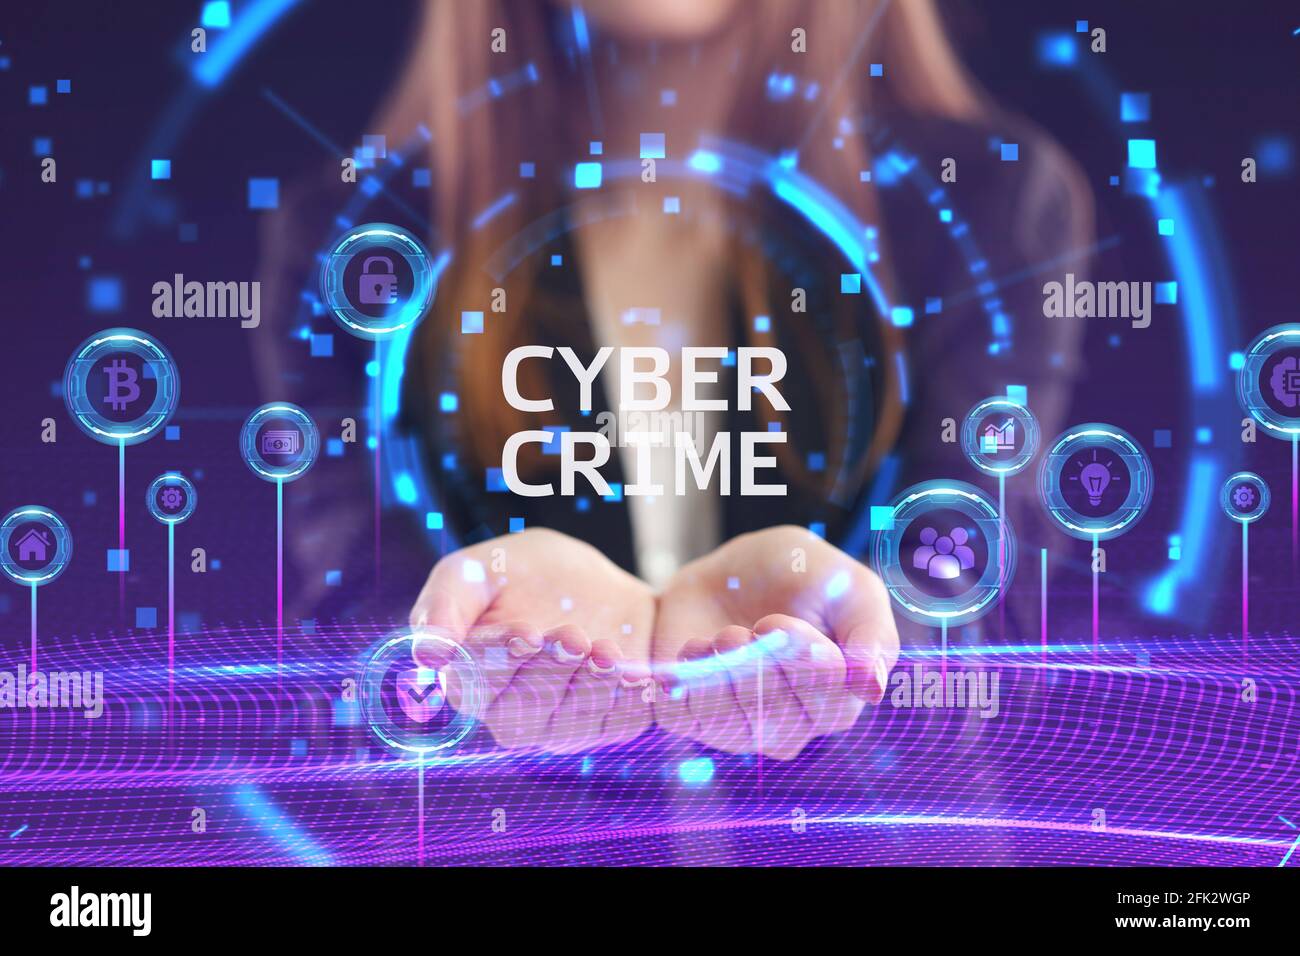 What Are The Top 5 Cyber Crimes? | Bajaj Allianz